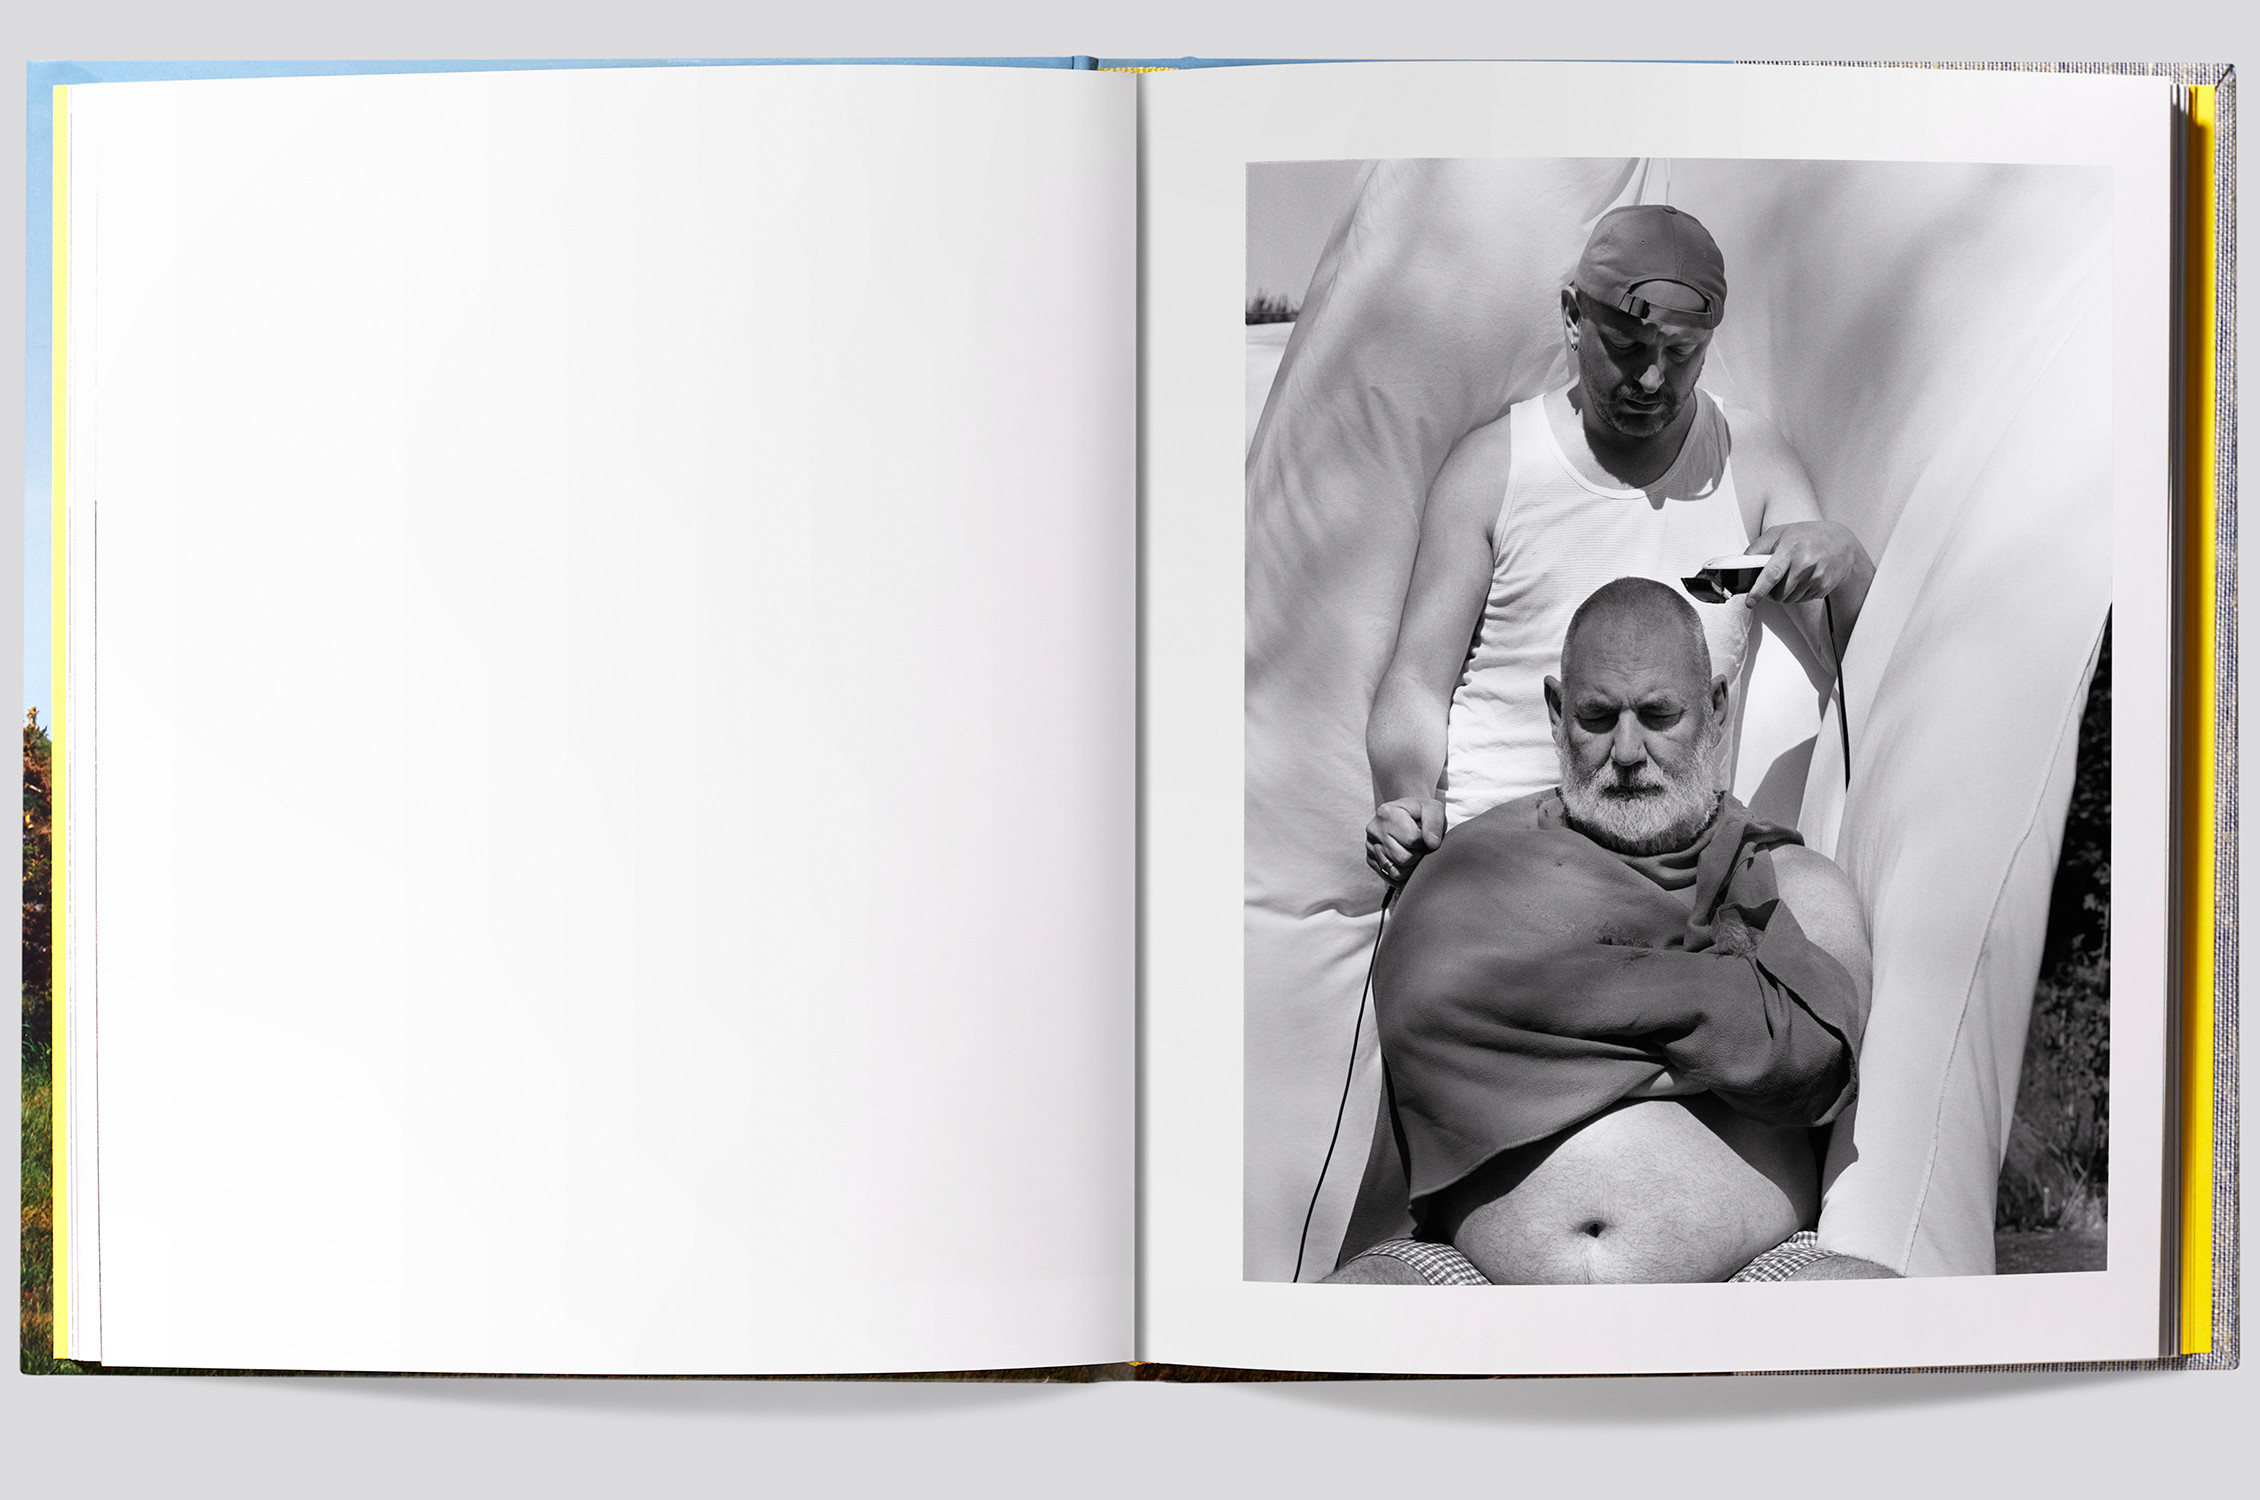 Daily weeding book, shot by Kuba Ryniewicz / notenote éditions - © artifices